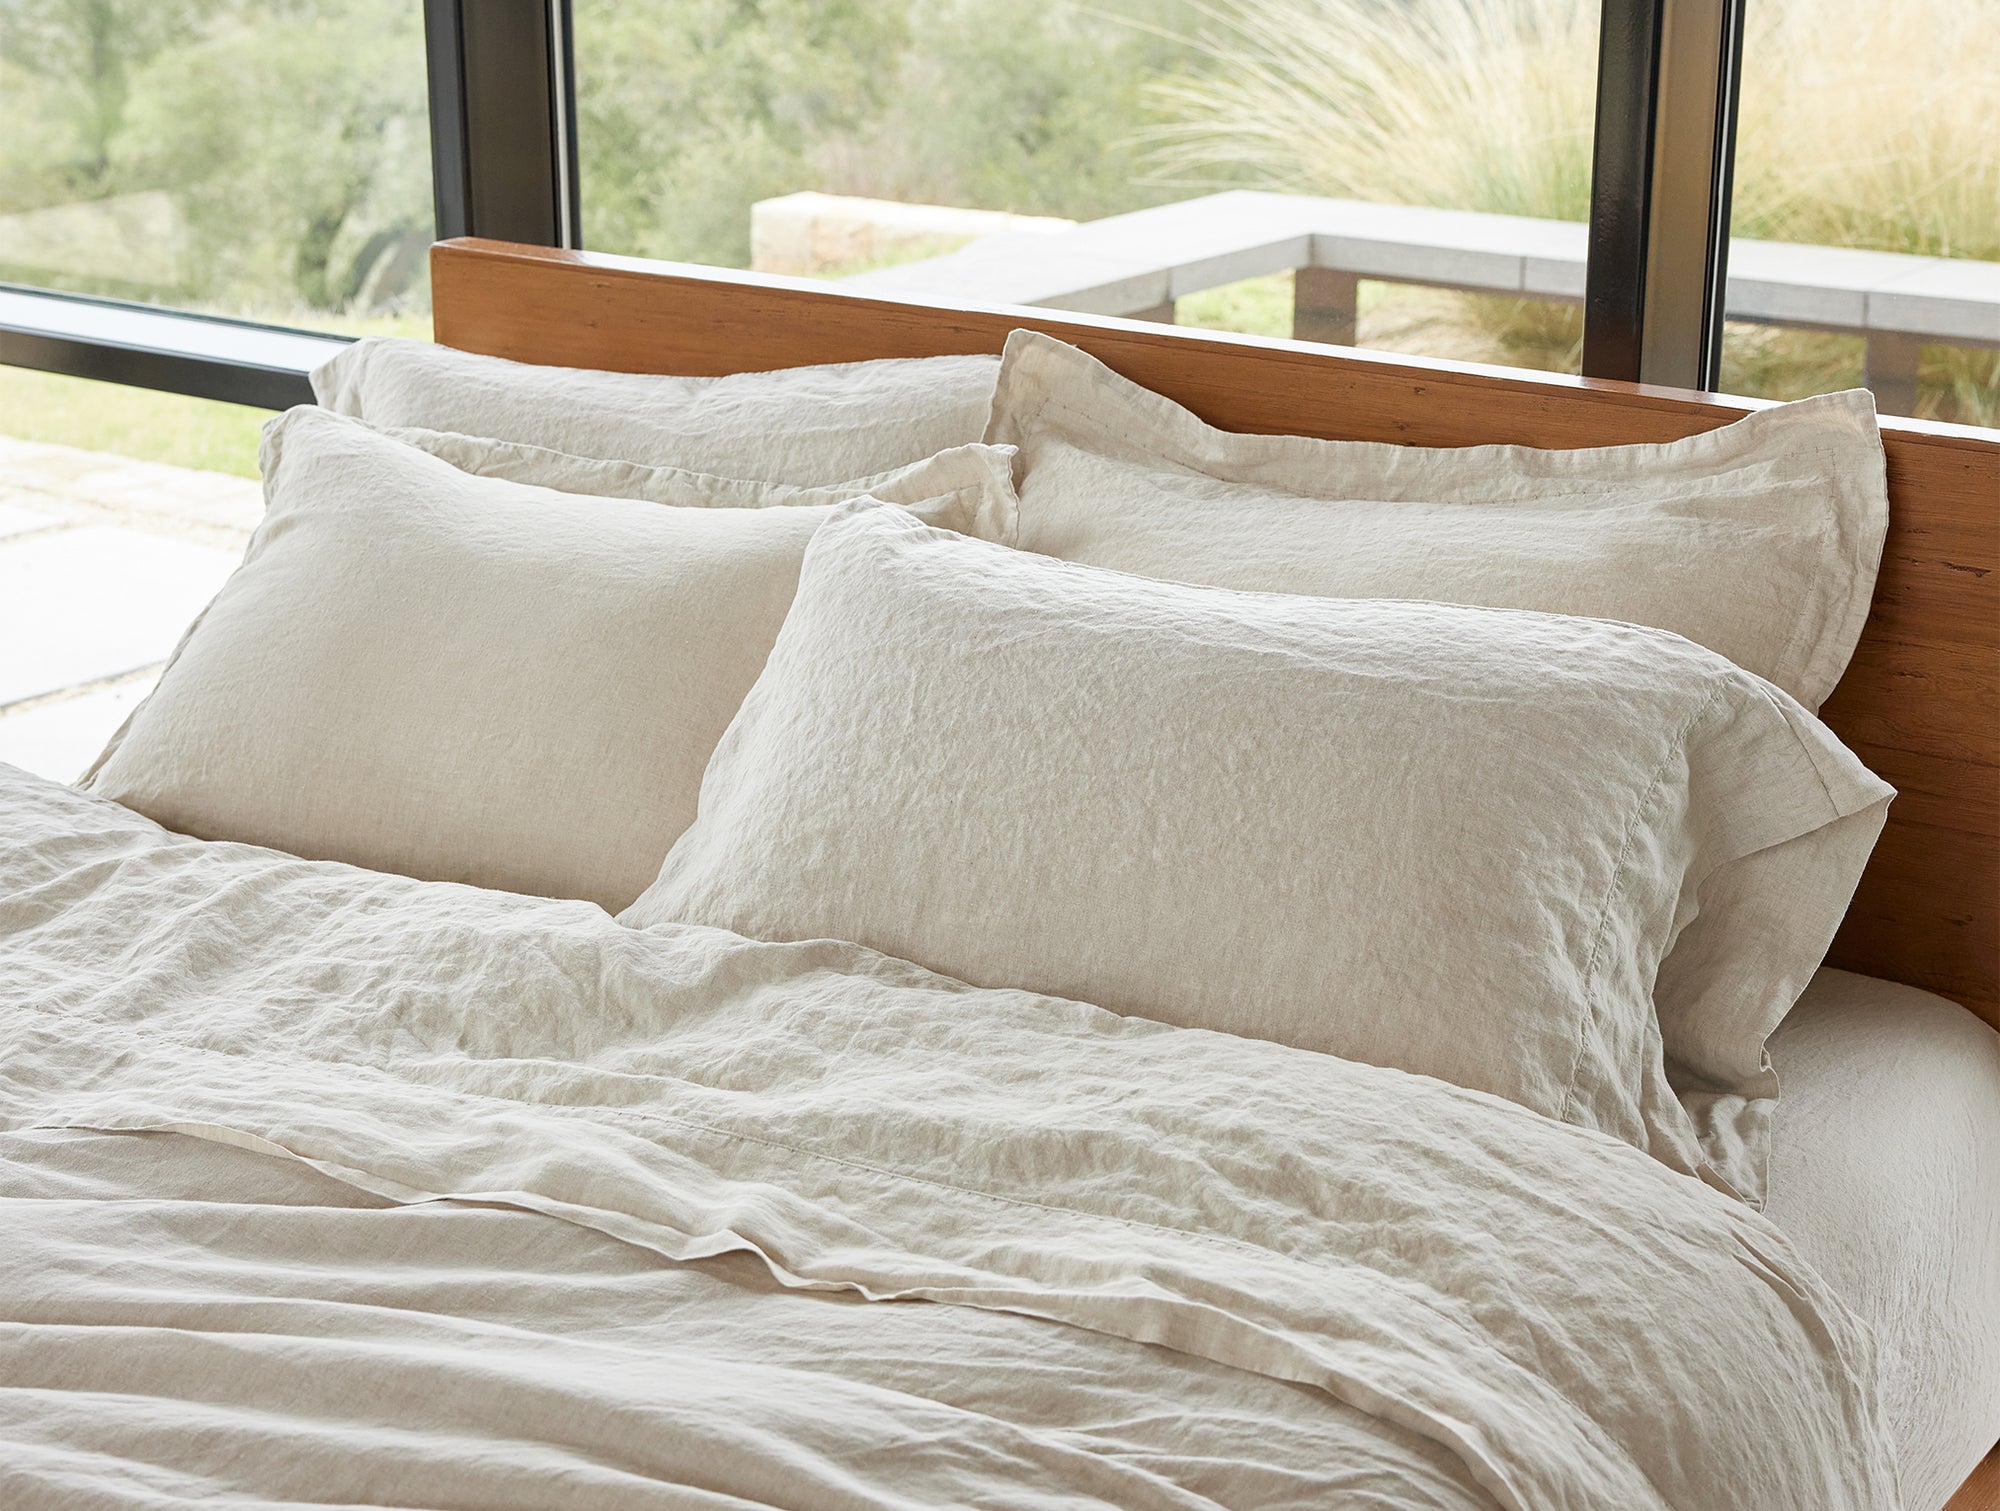 Hospitality Bulk Set of 6 White Flat Bed Sheets - Easy Care (Assorted Sizes)